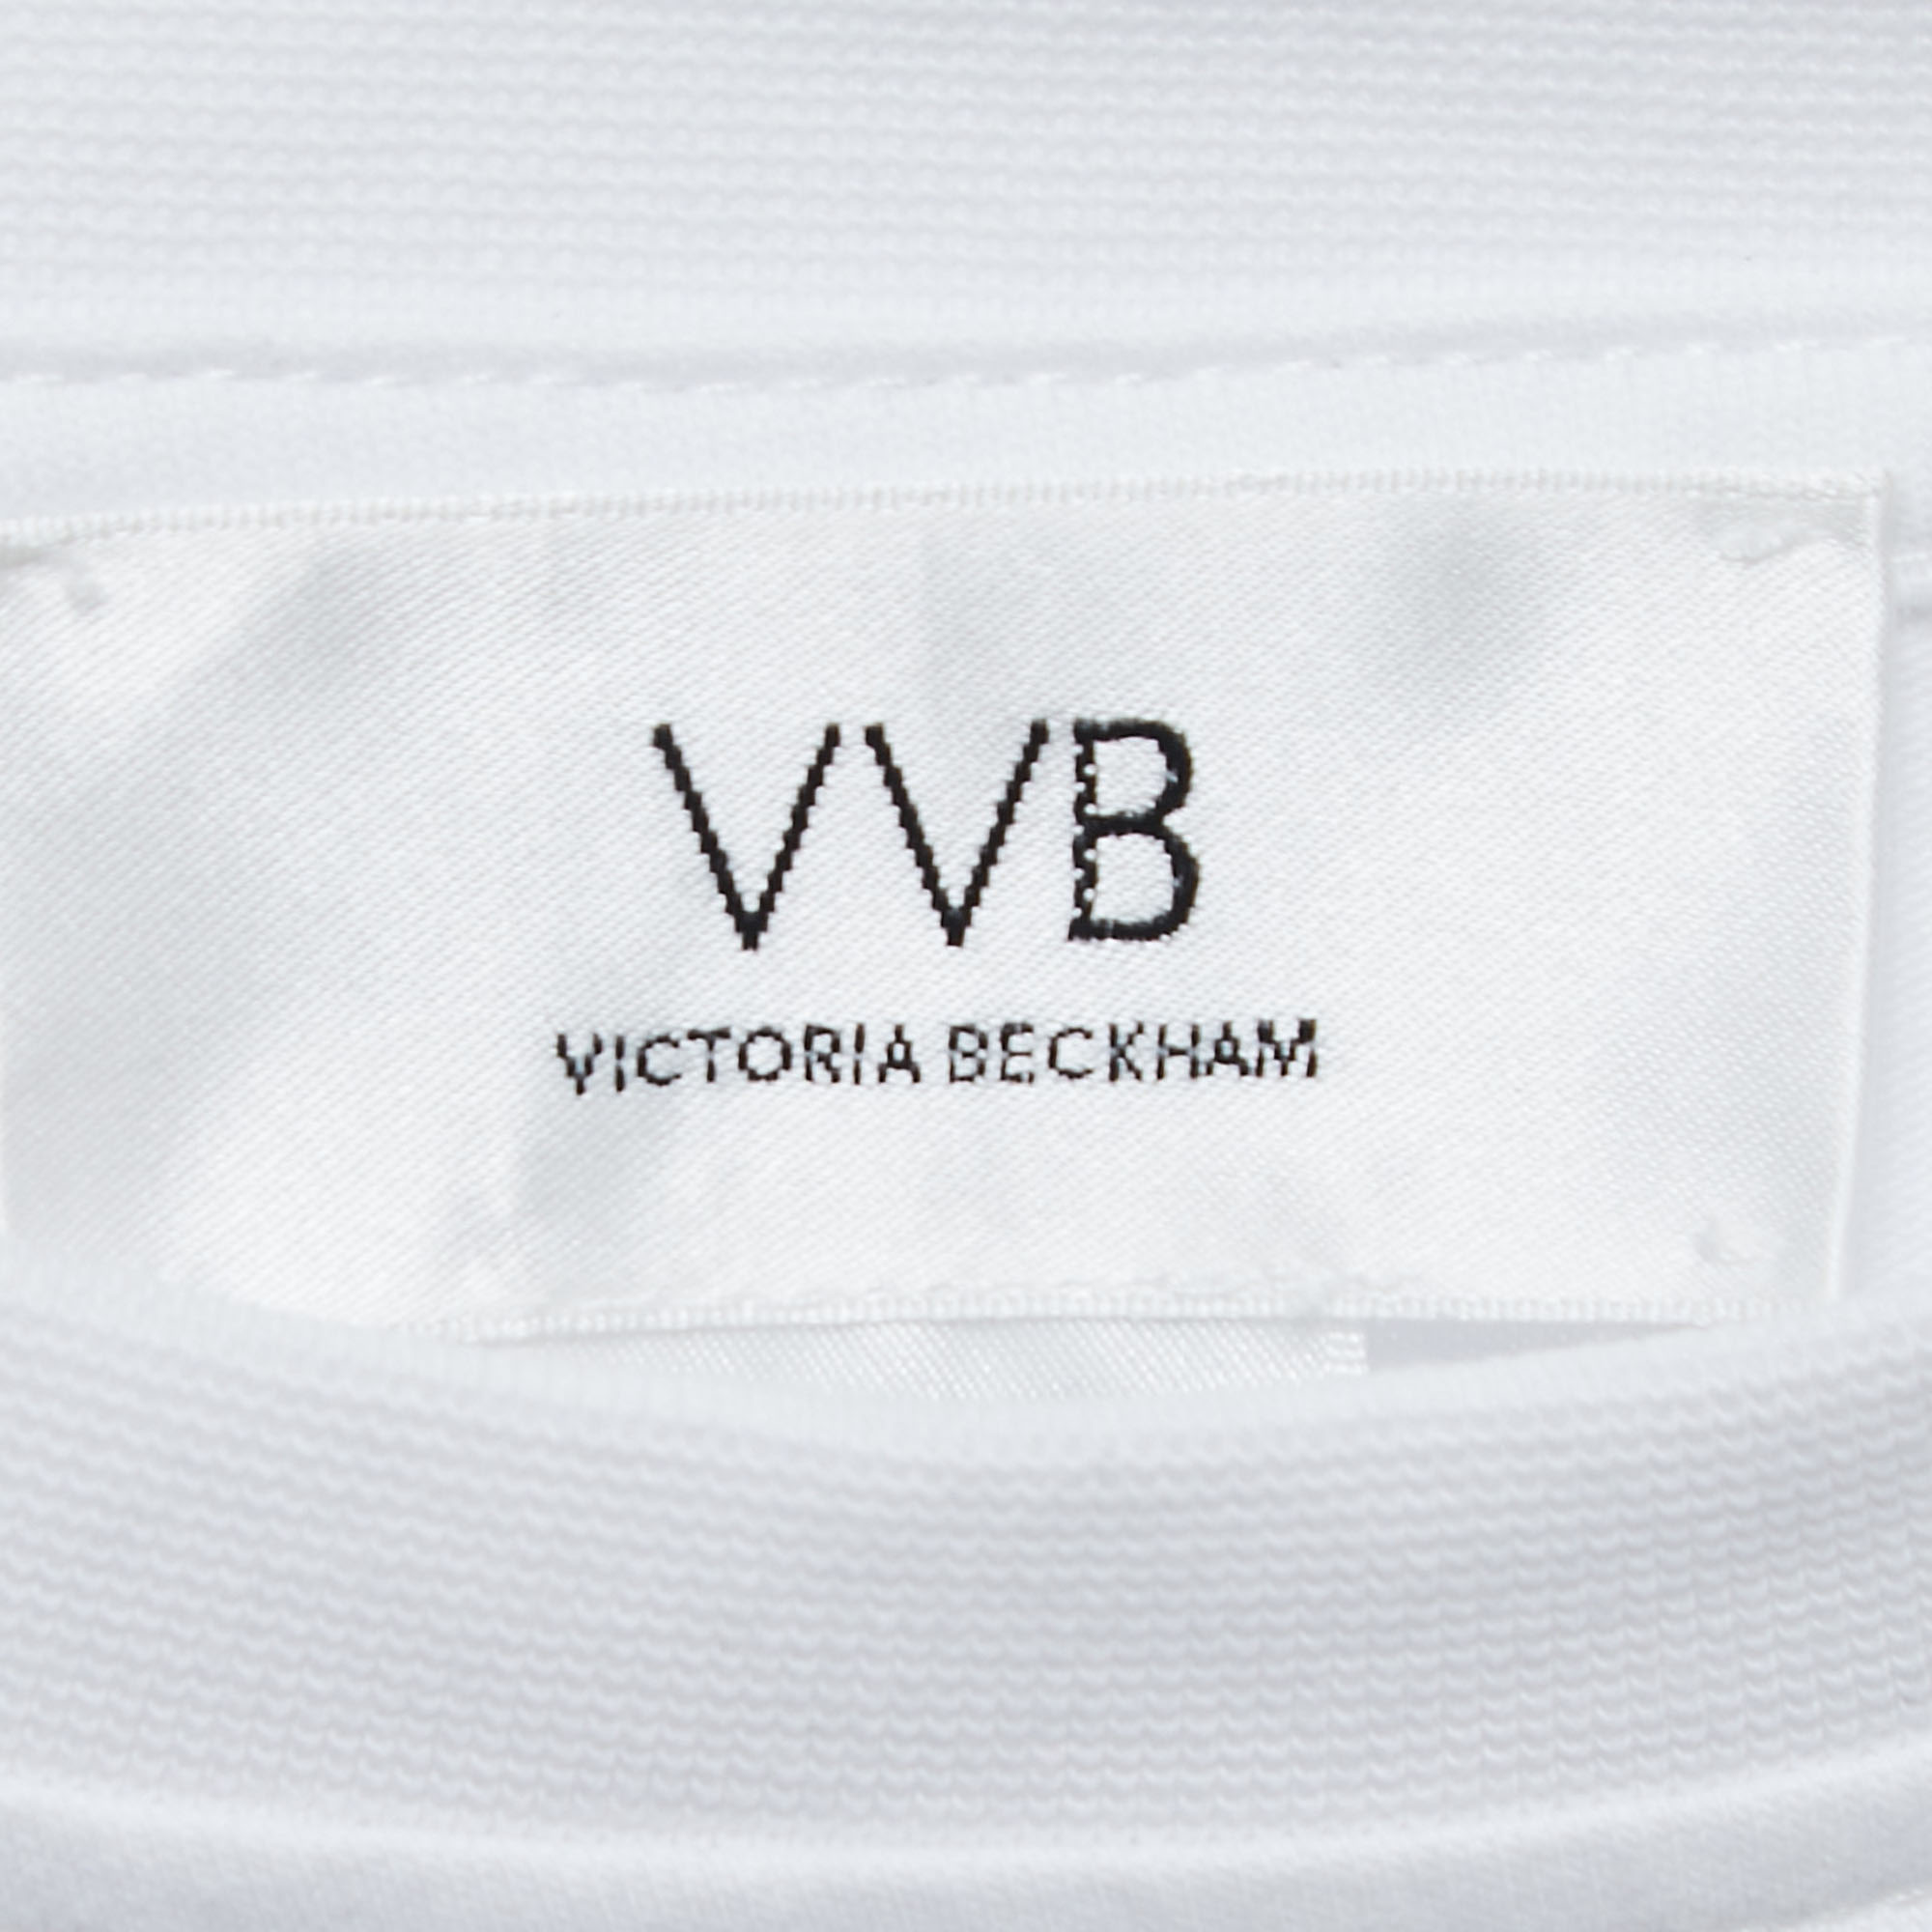 Victoria Victoria Beckham White Love Print Cotton Crew Neck Short Sleeve T-Shirt S